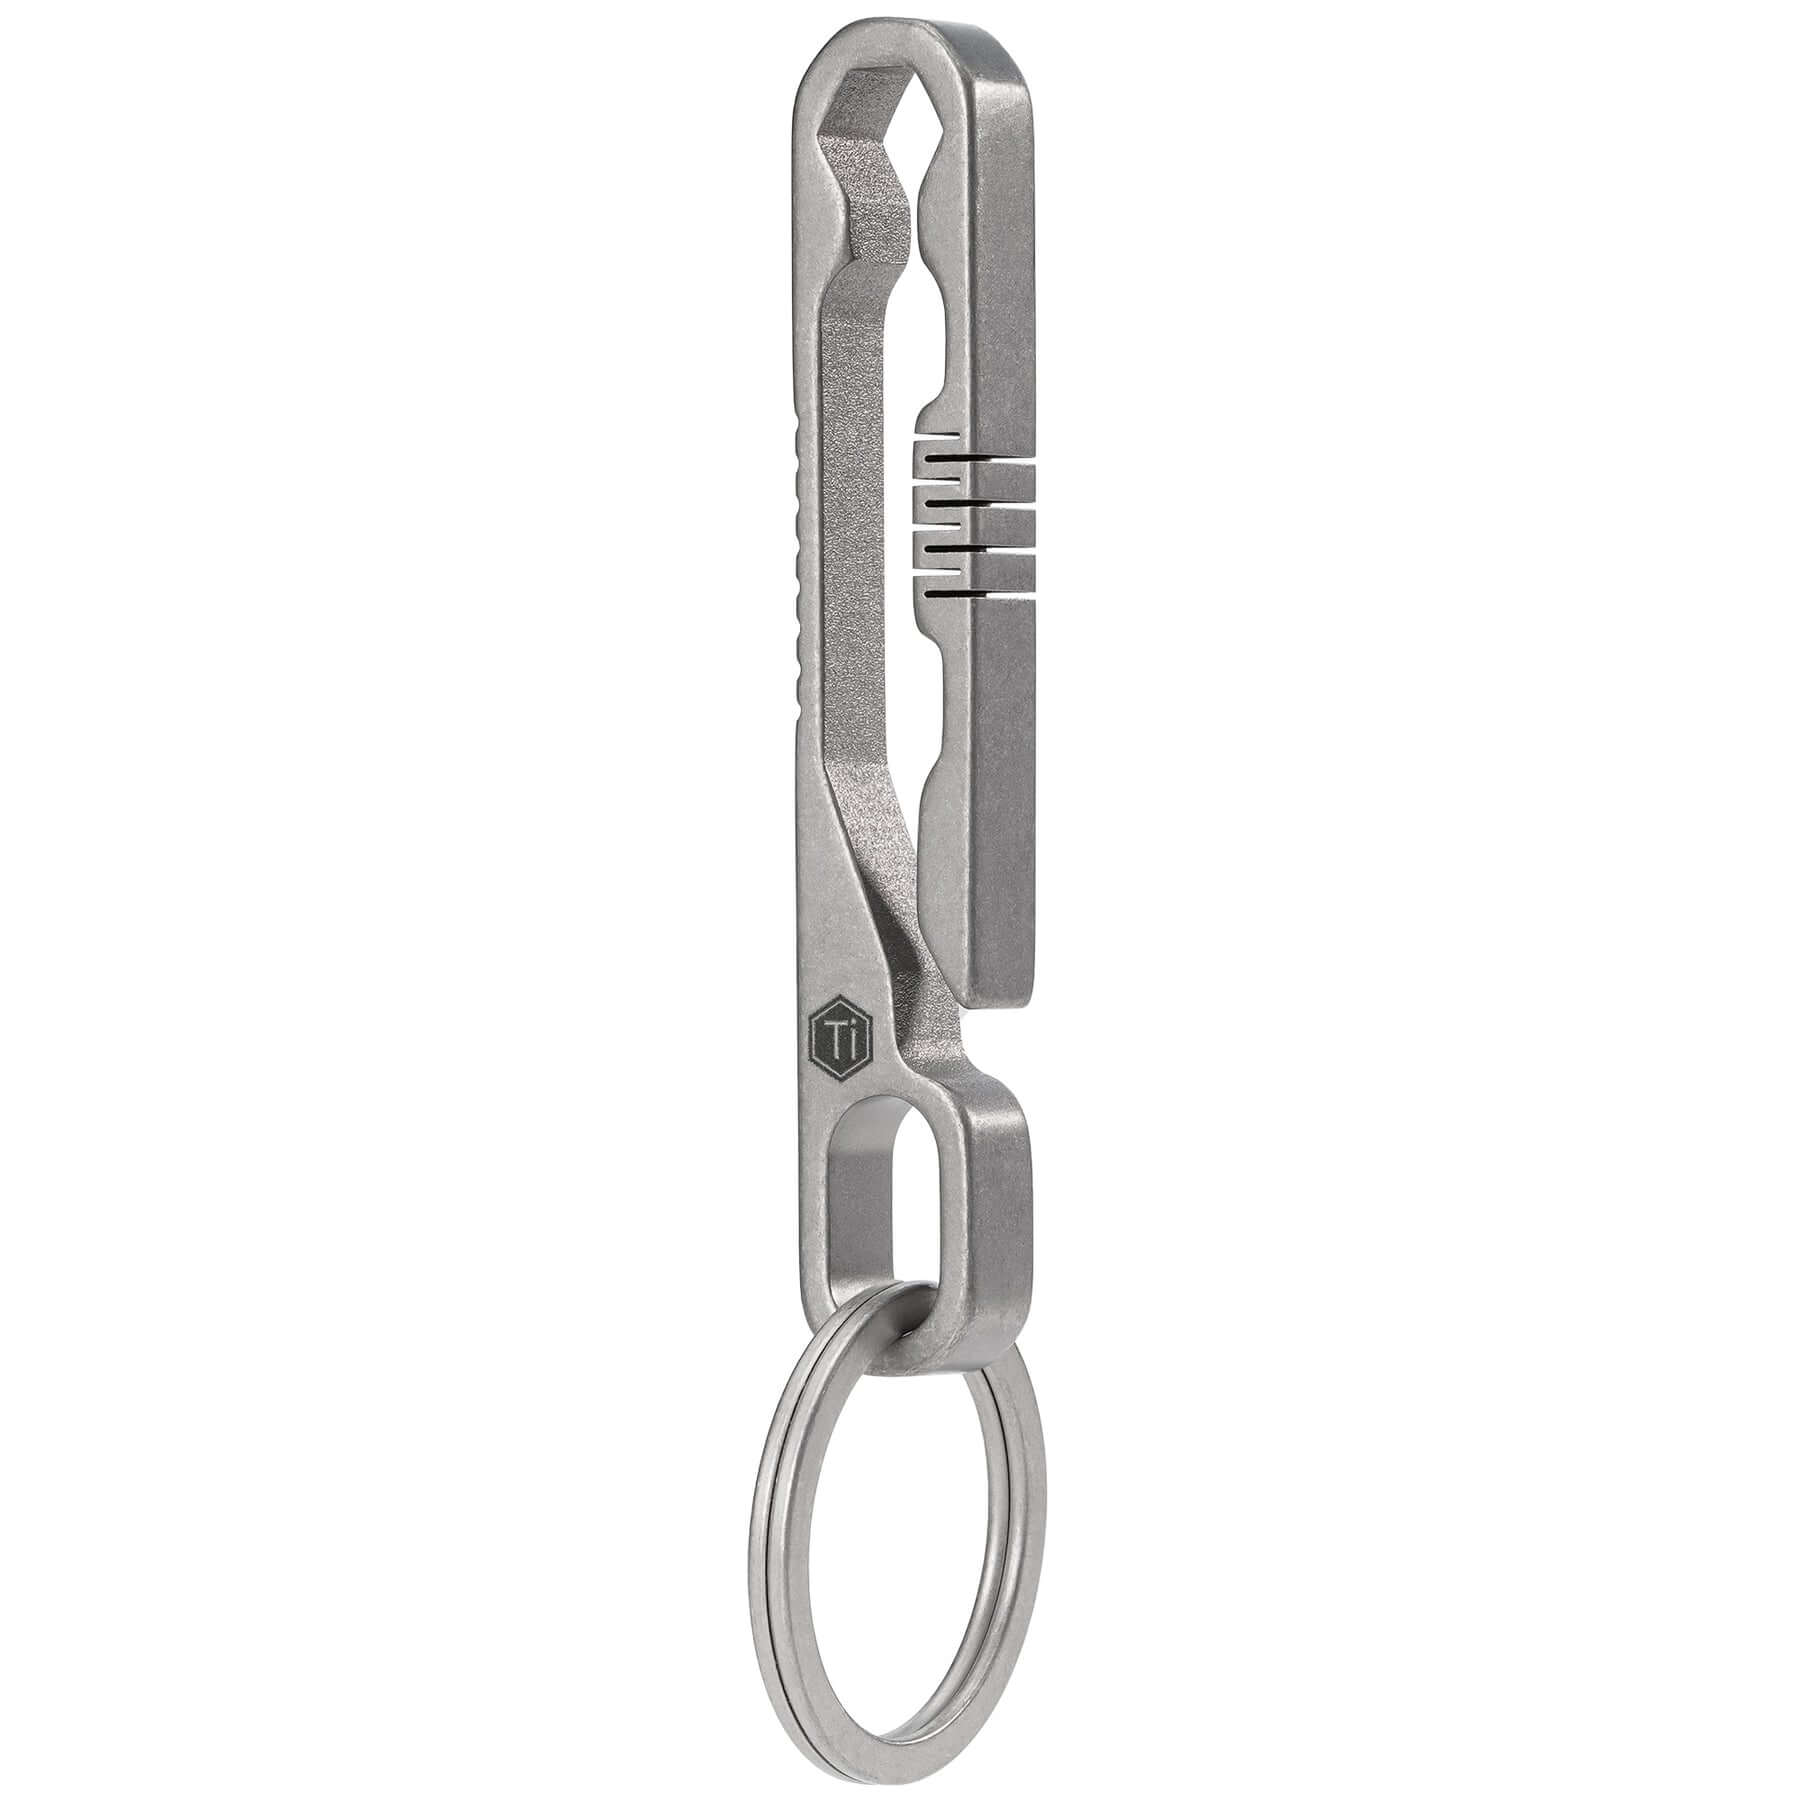 KM00 Titanium Alloy Keychain Belt Clip